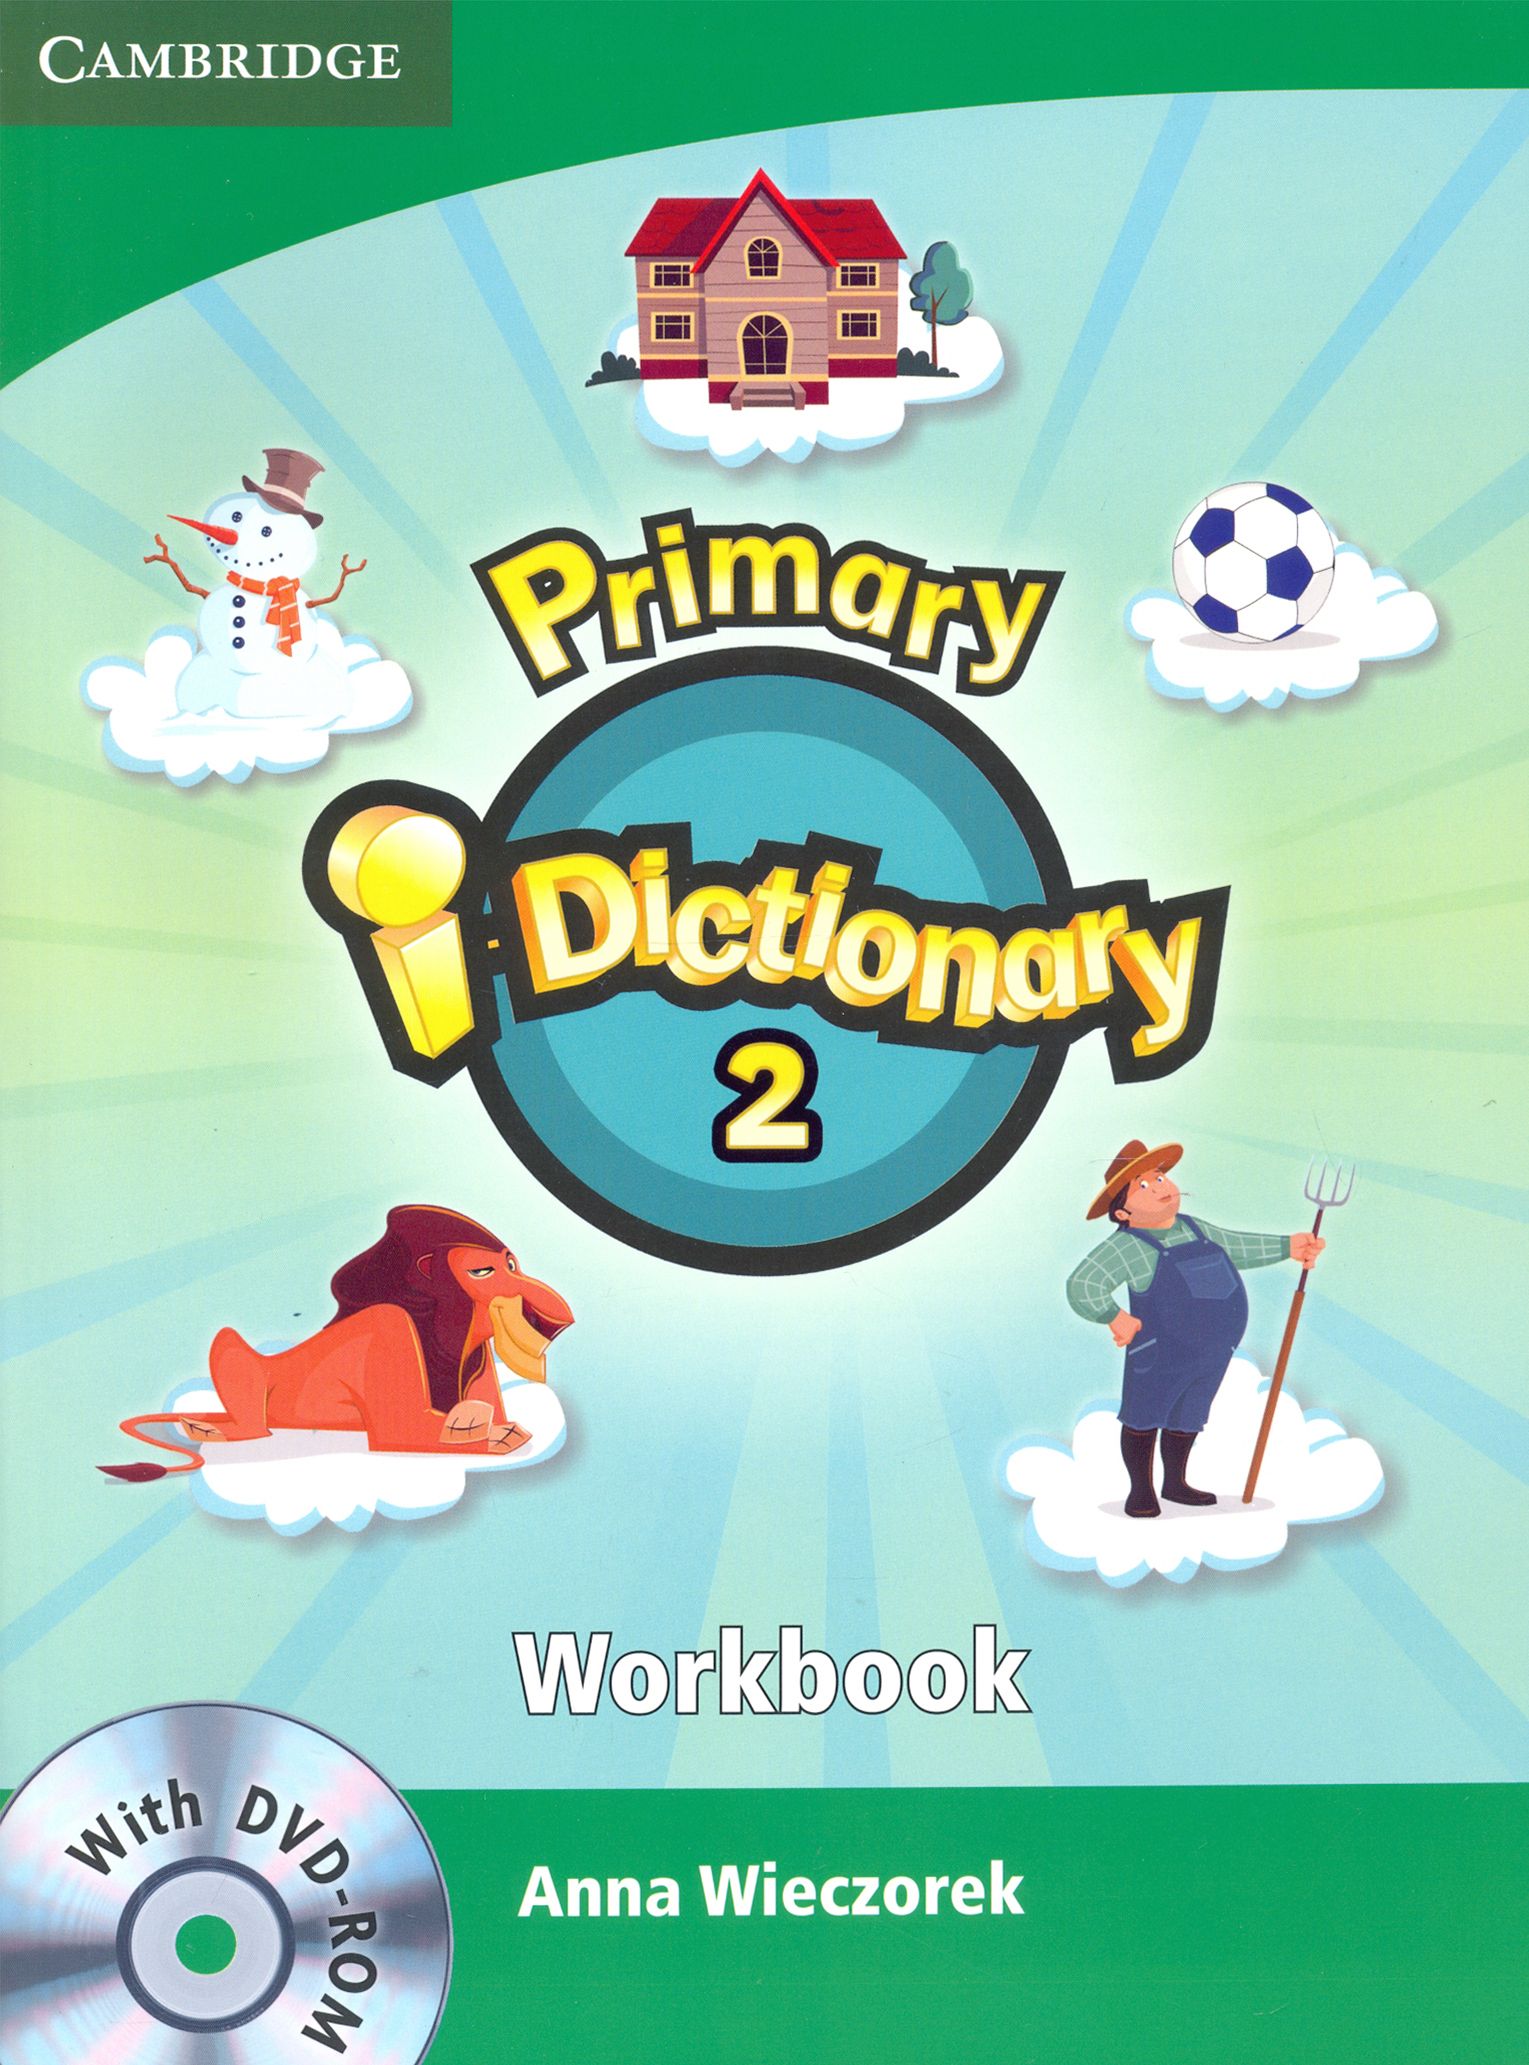 Two dictionary. Primary i Dictionary. Primary i Dictionary 2. Primary i Dictionary 1. Cambridge Primary Dictionary.